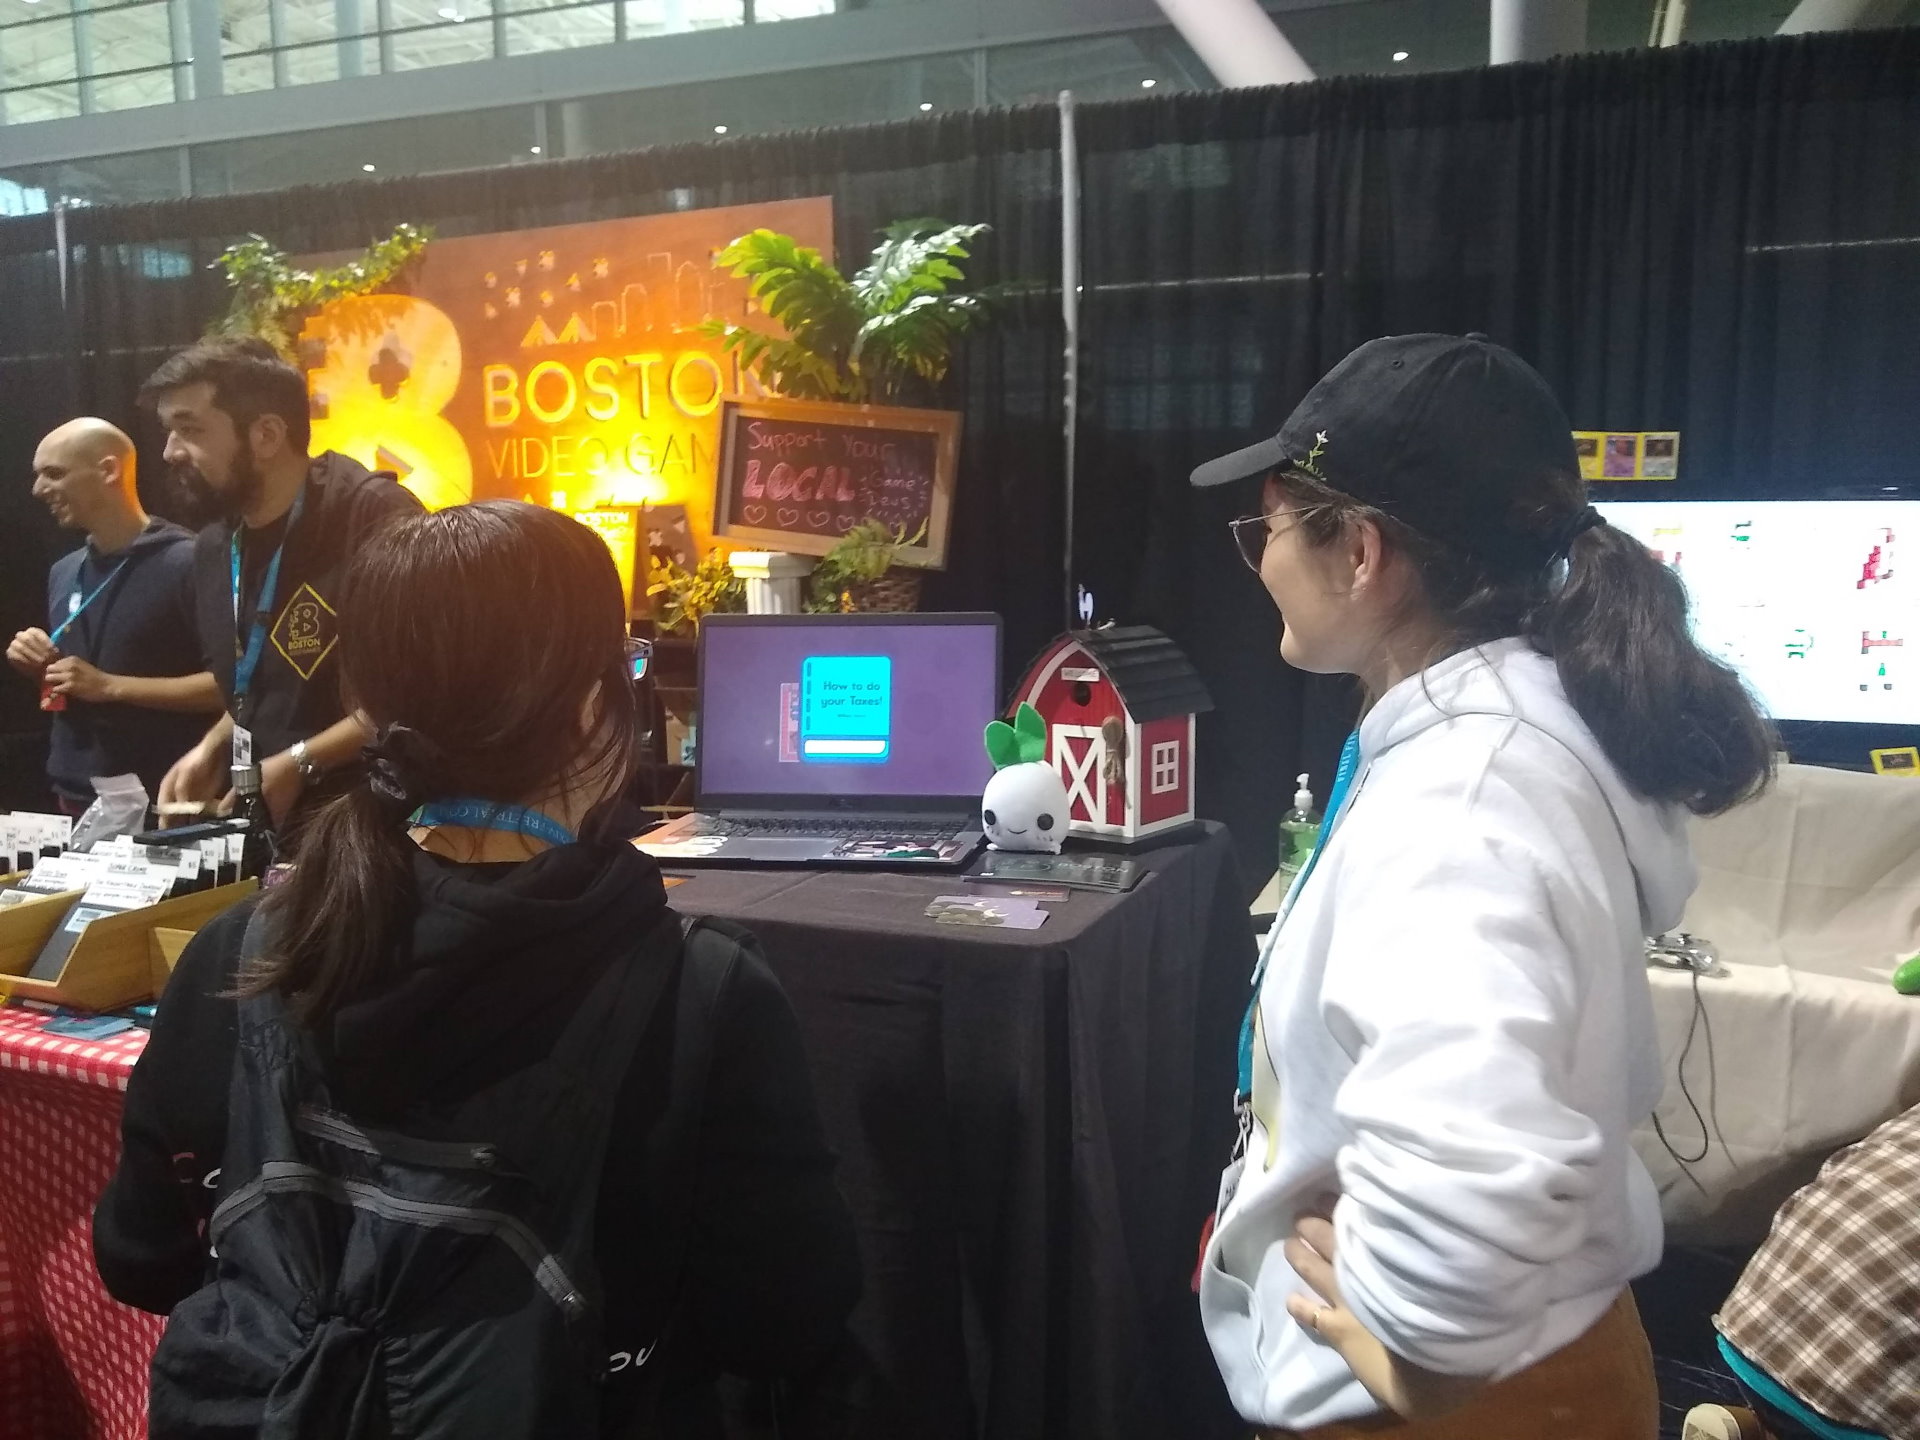 Us showcasing Turnip Boy at the Boston Video Games PAX booth!